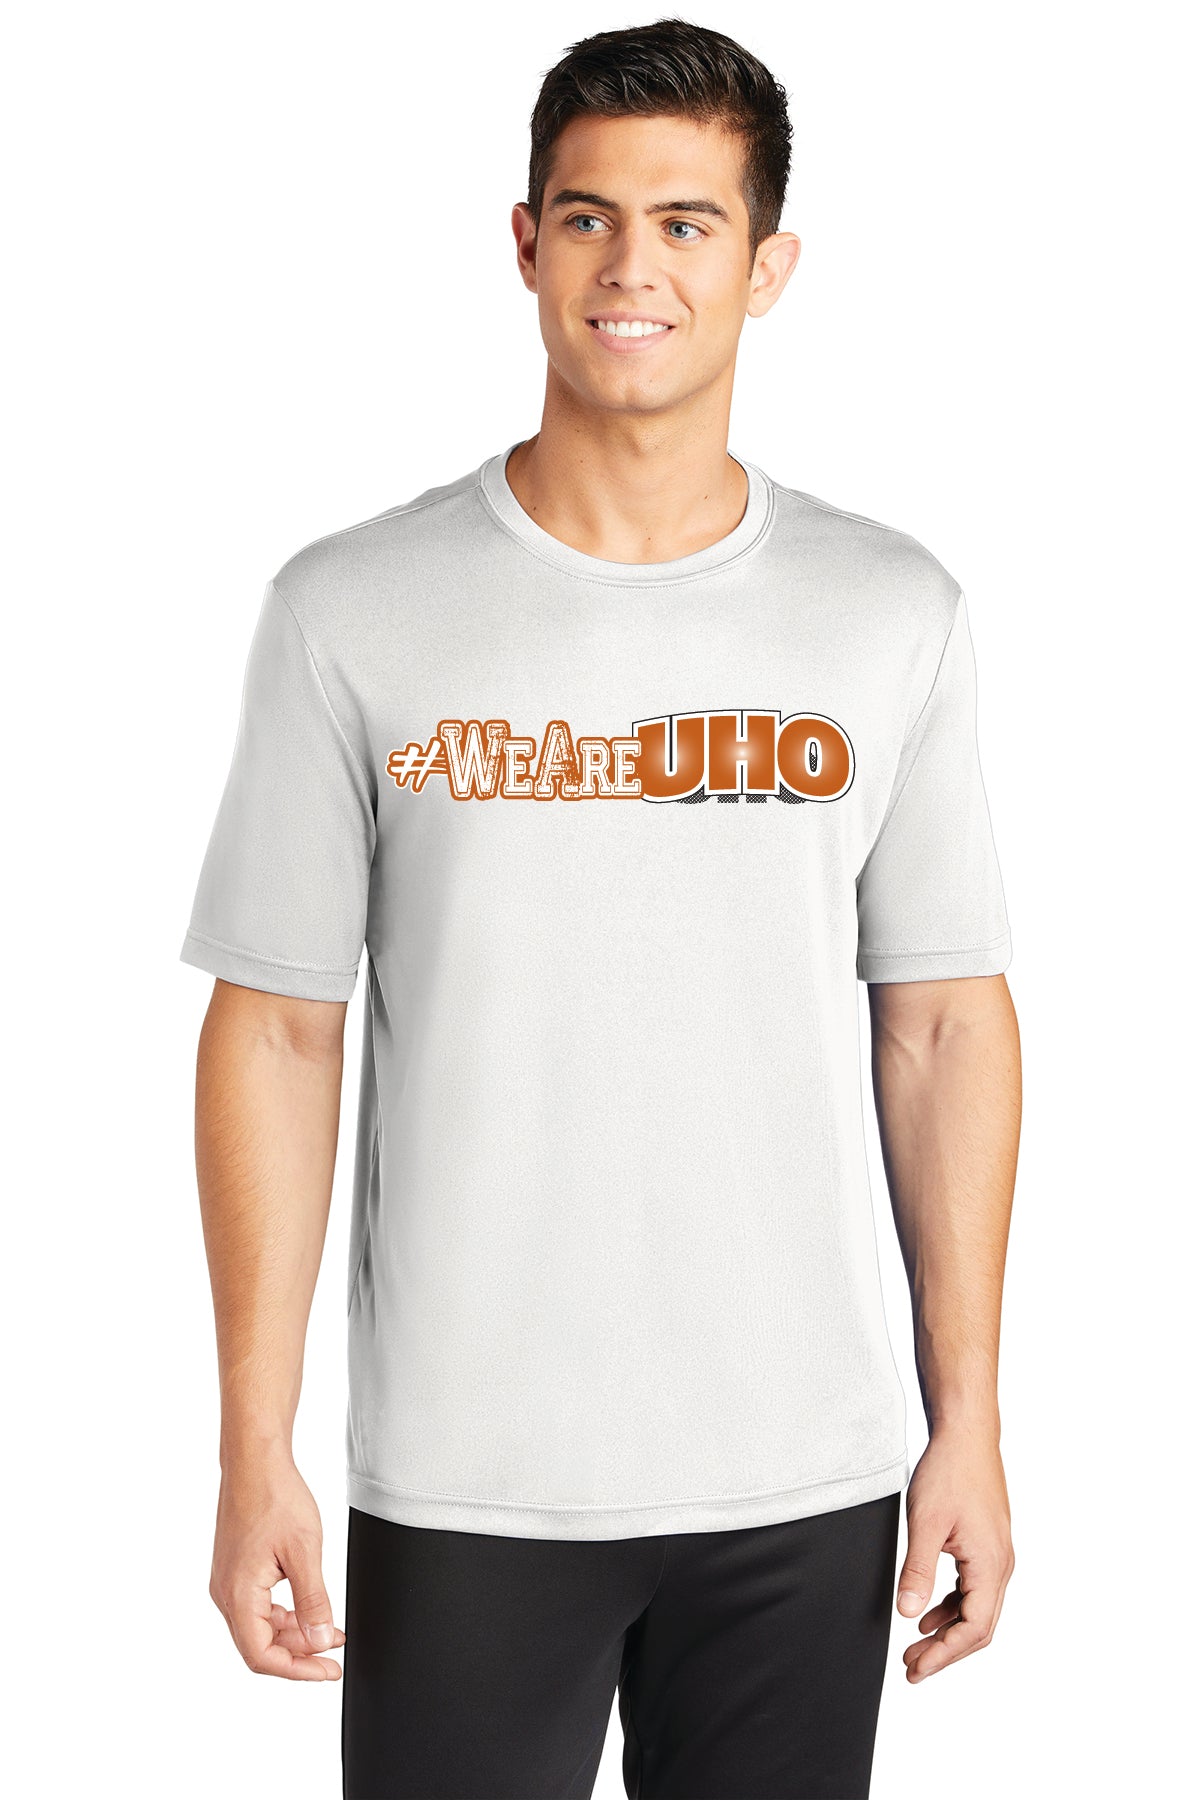 We Are UHO Moisture-Wicking T-Shirt